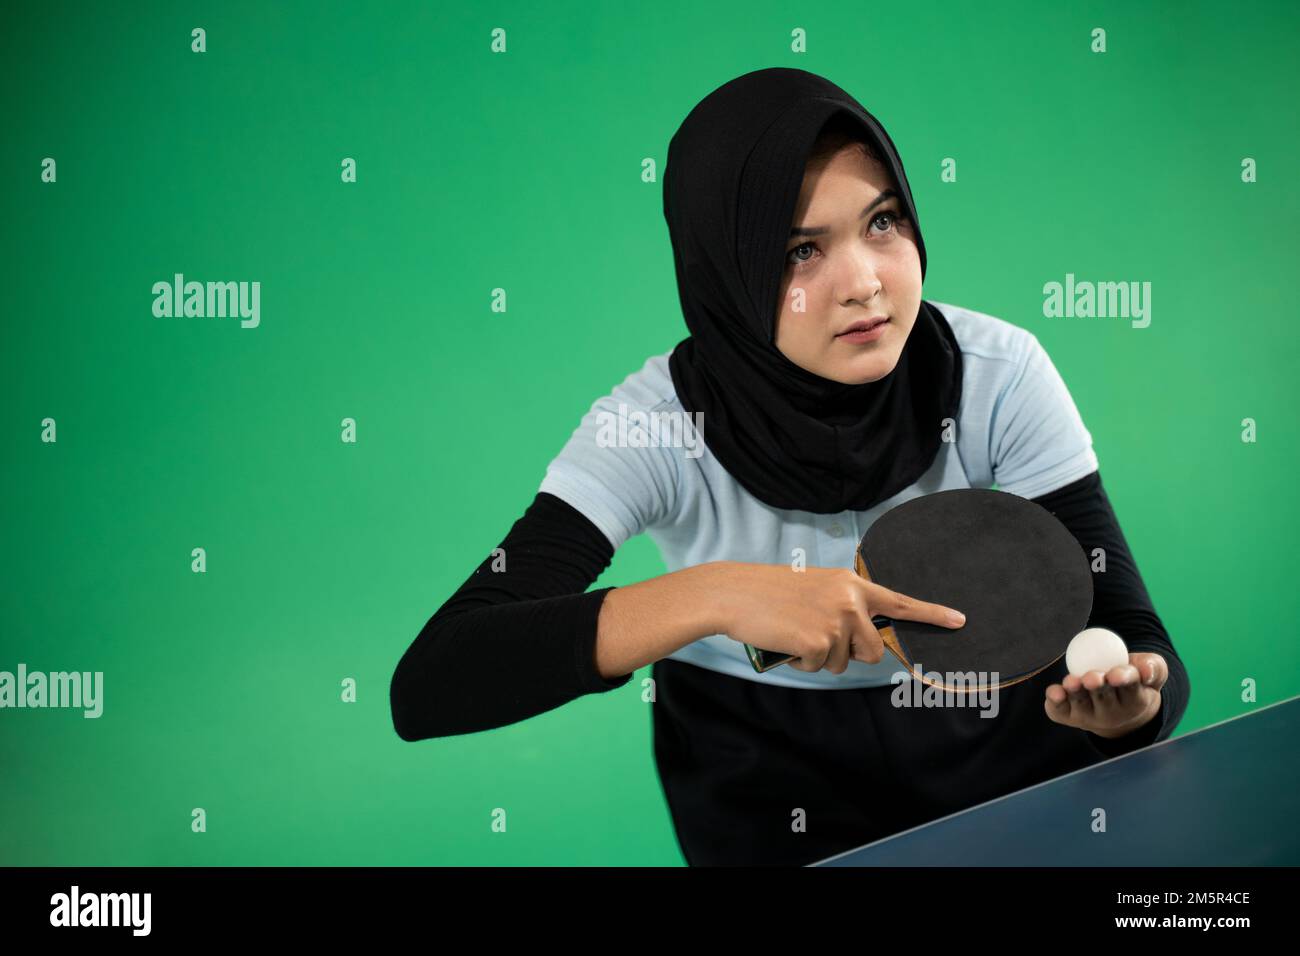 Asian Muslim female athlete preparing to serve Stock Photo